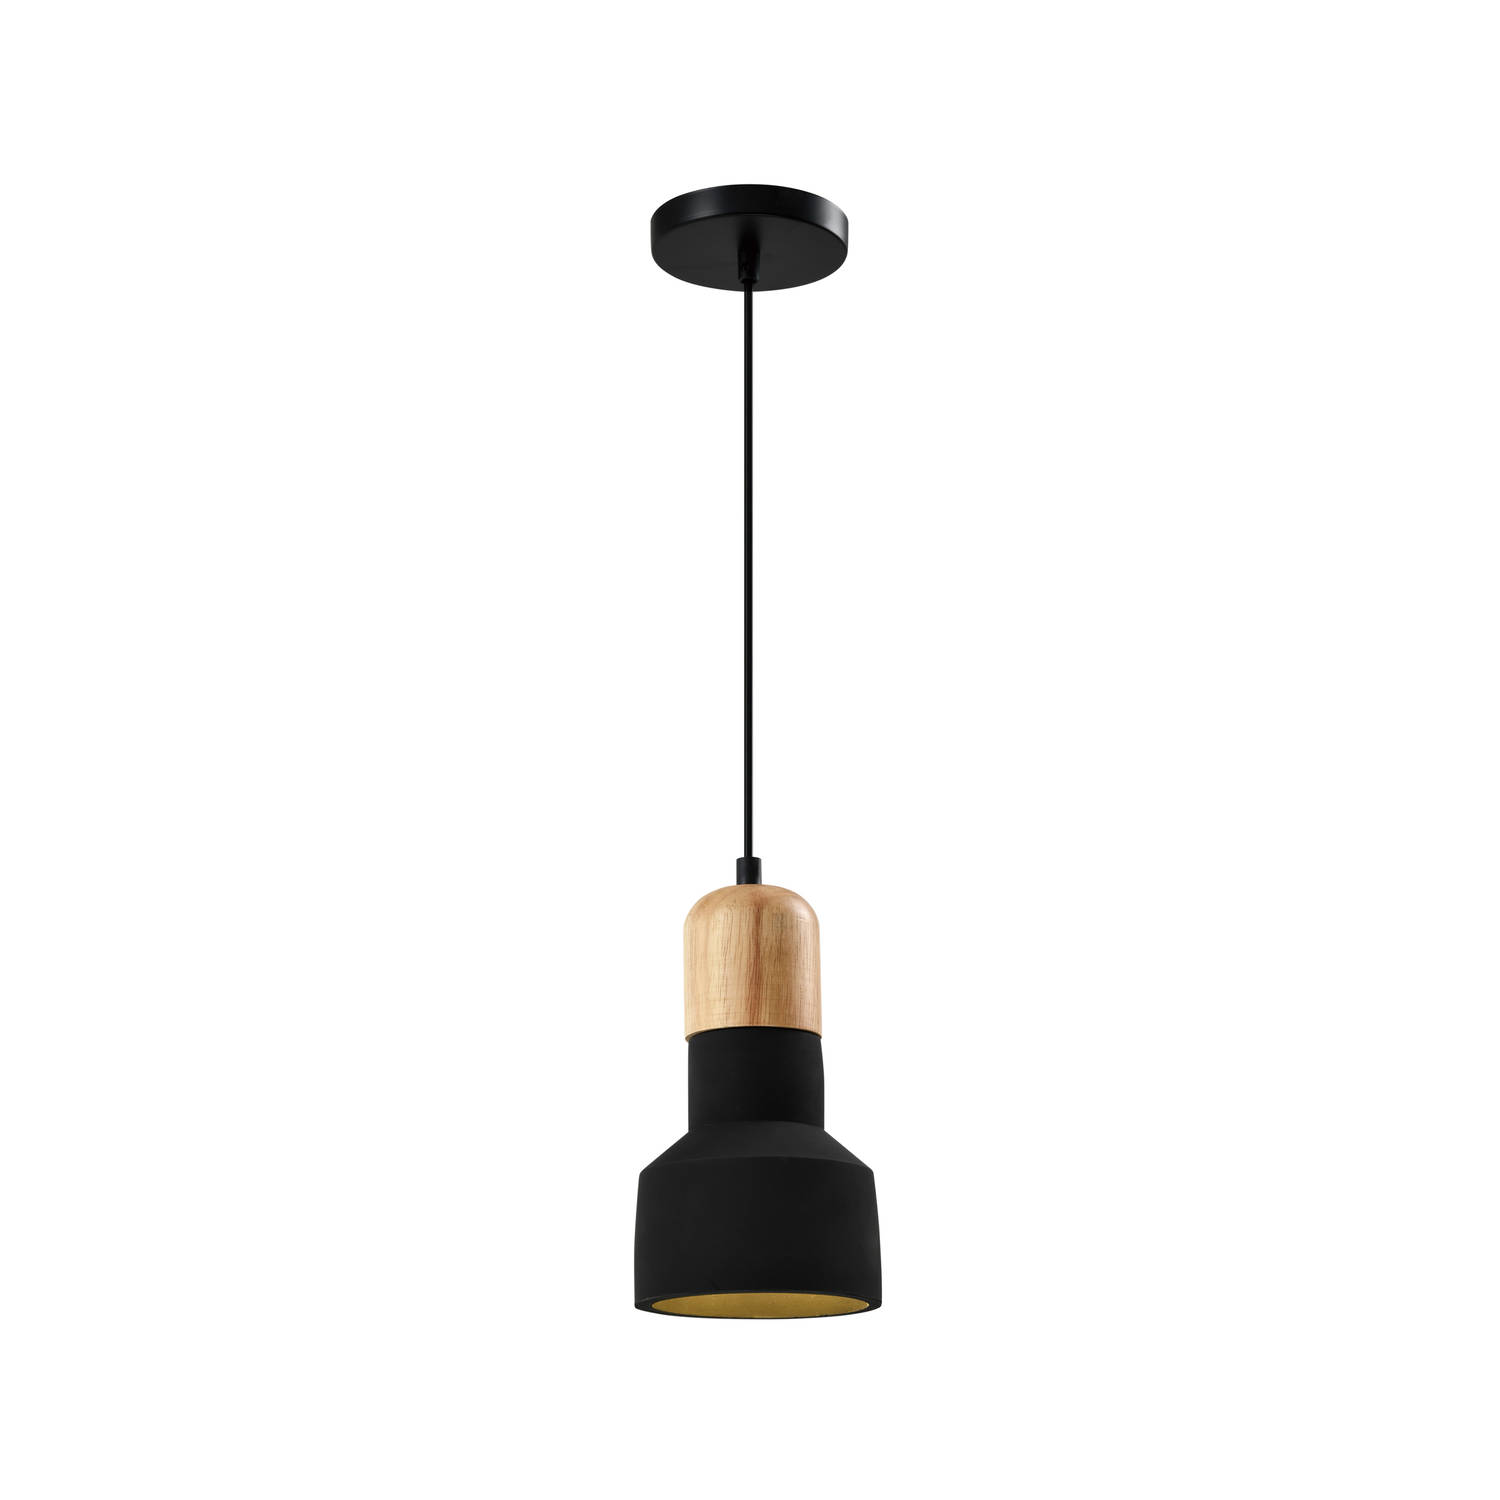 QUVIO Hanglamp langwerpig beton met hout zwart - QUV5143L-BLACK